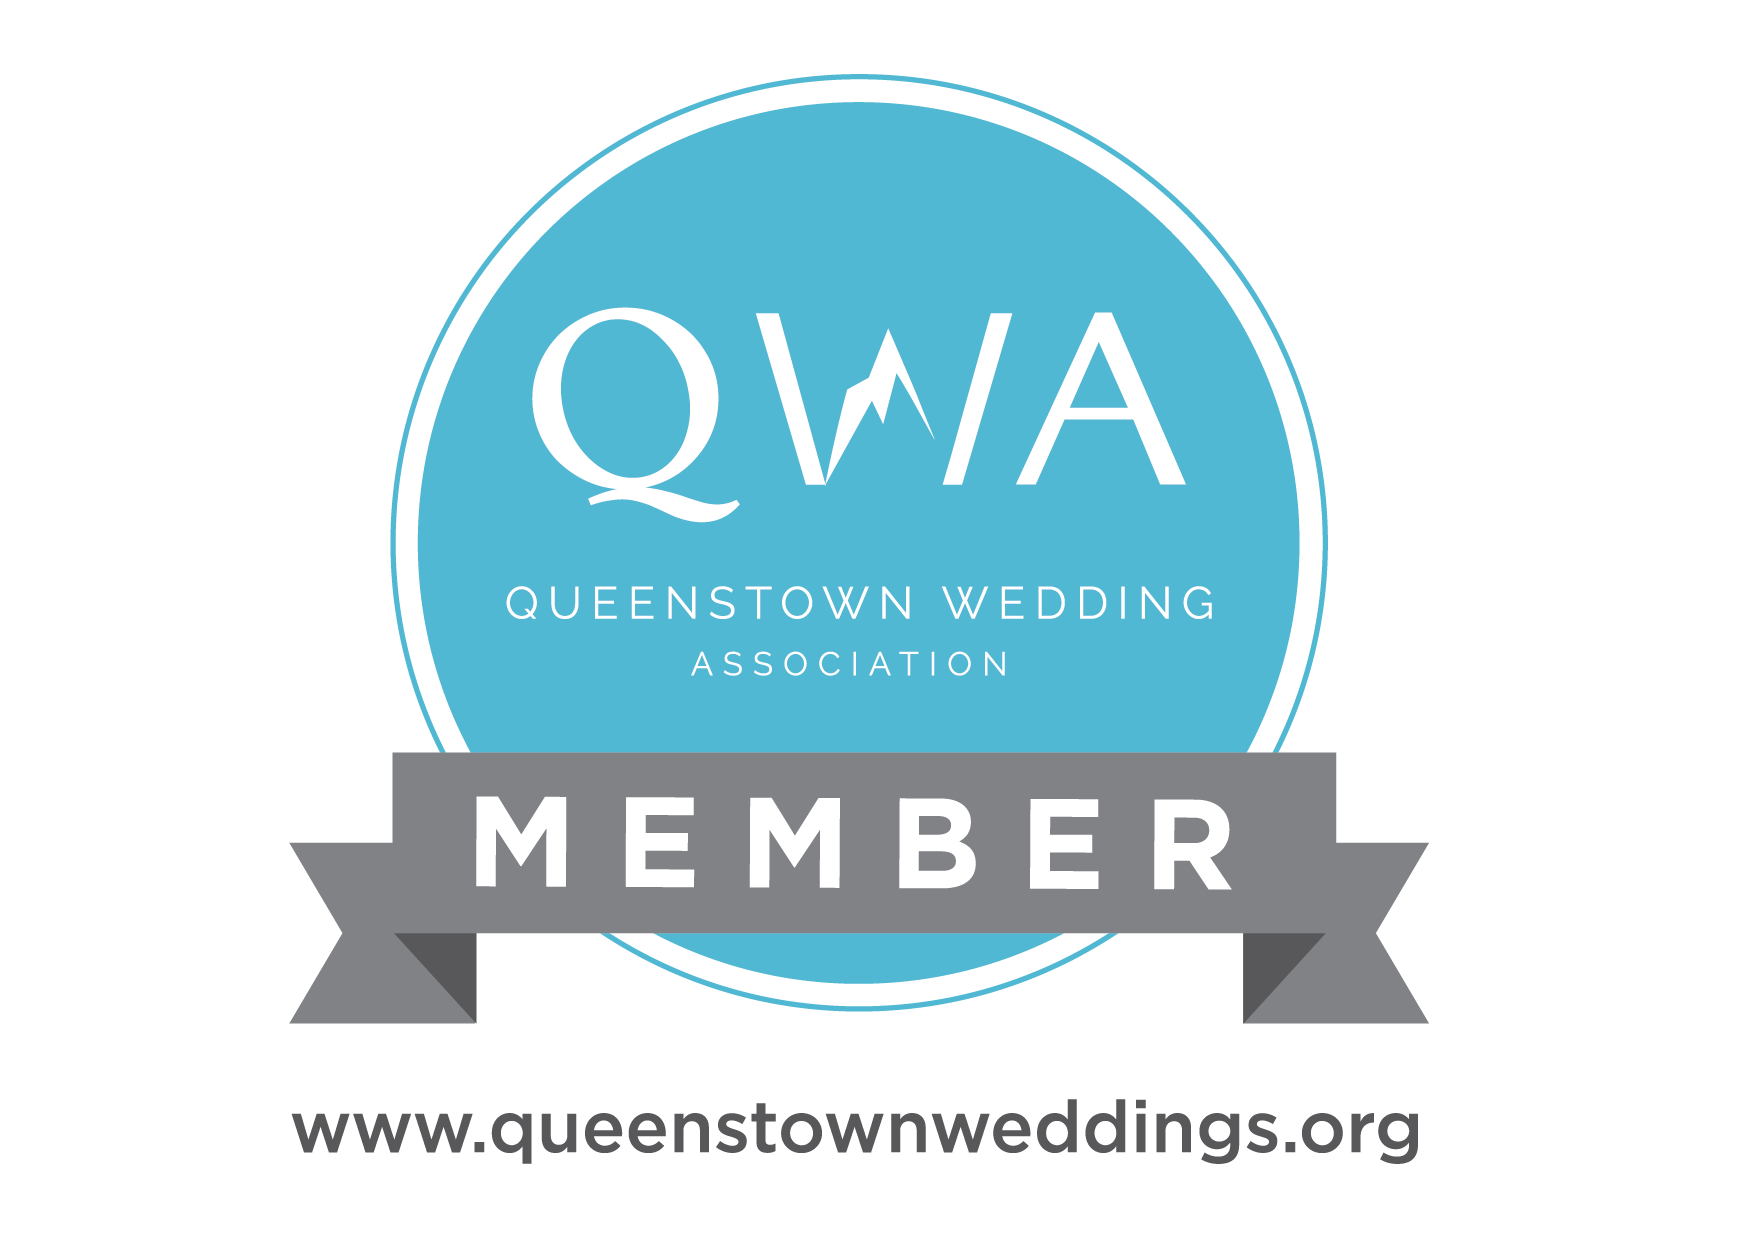 queenstown-wedding-association-member-spotlight-blog-featured-image